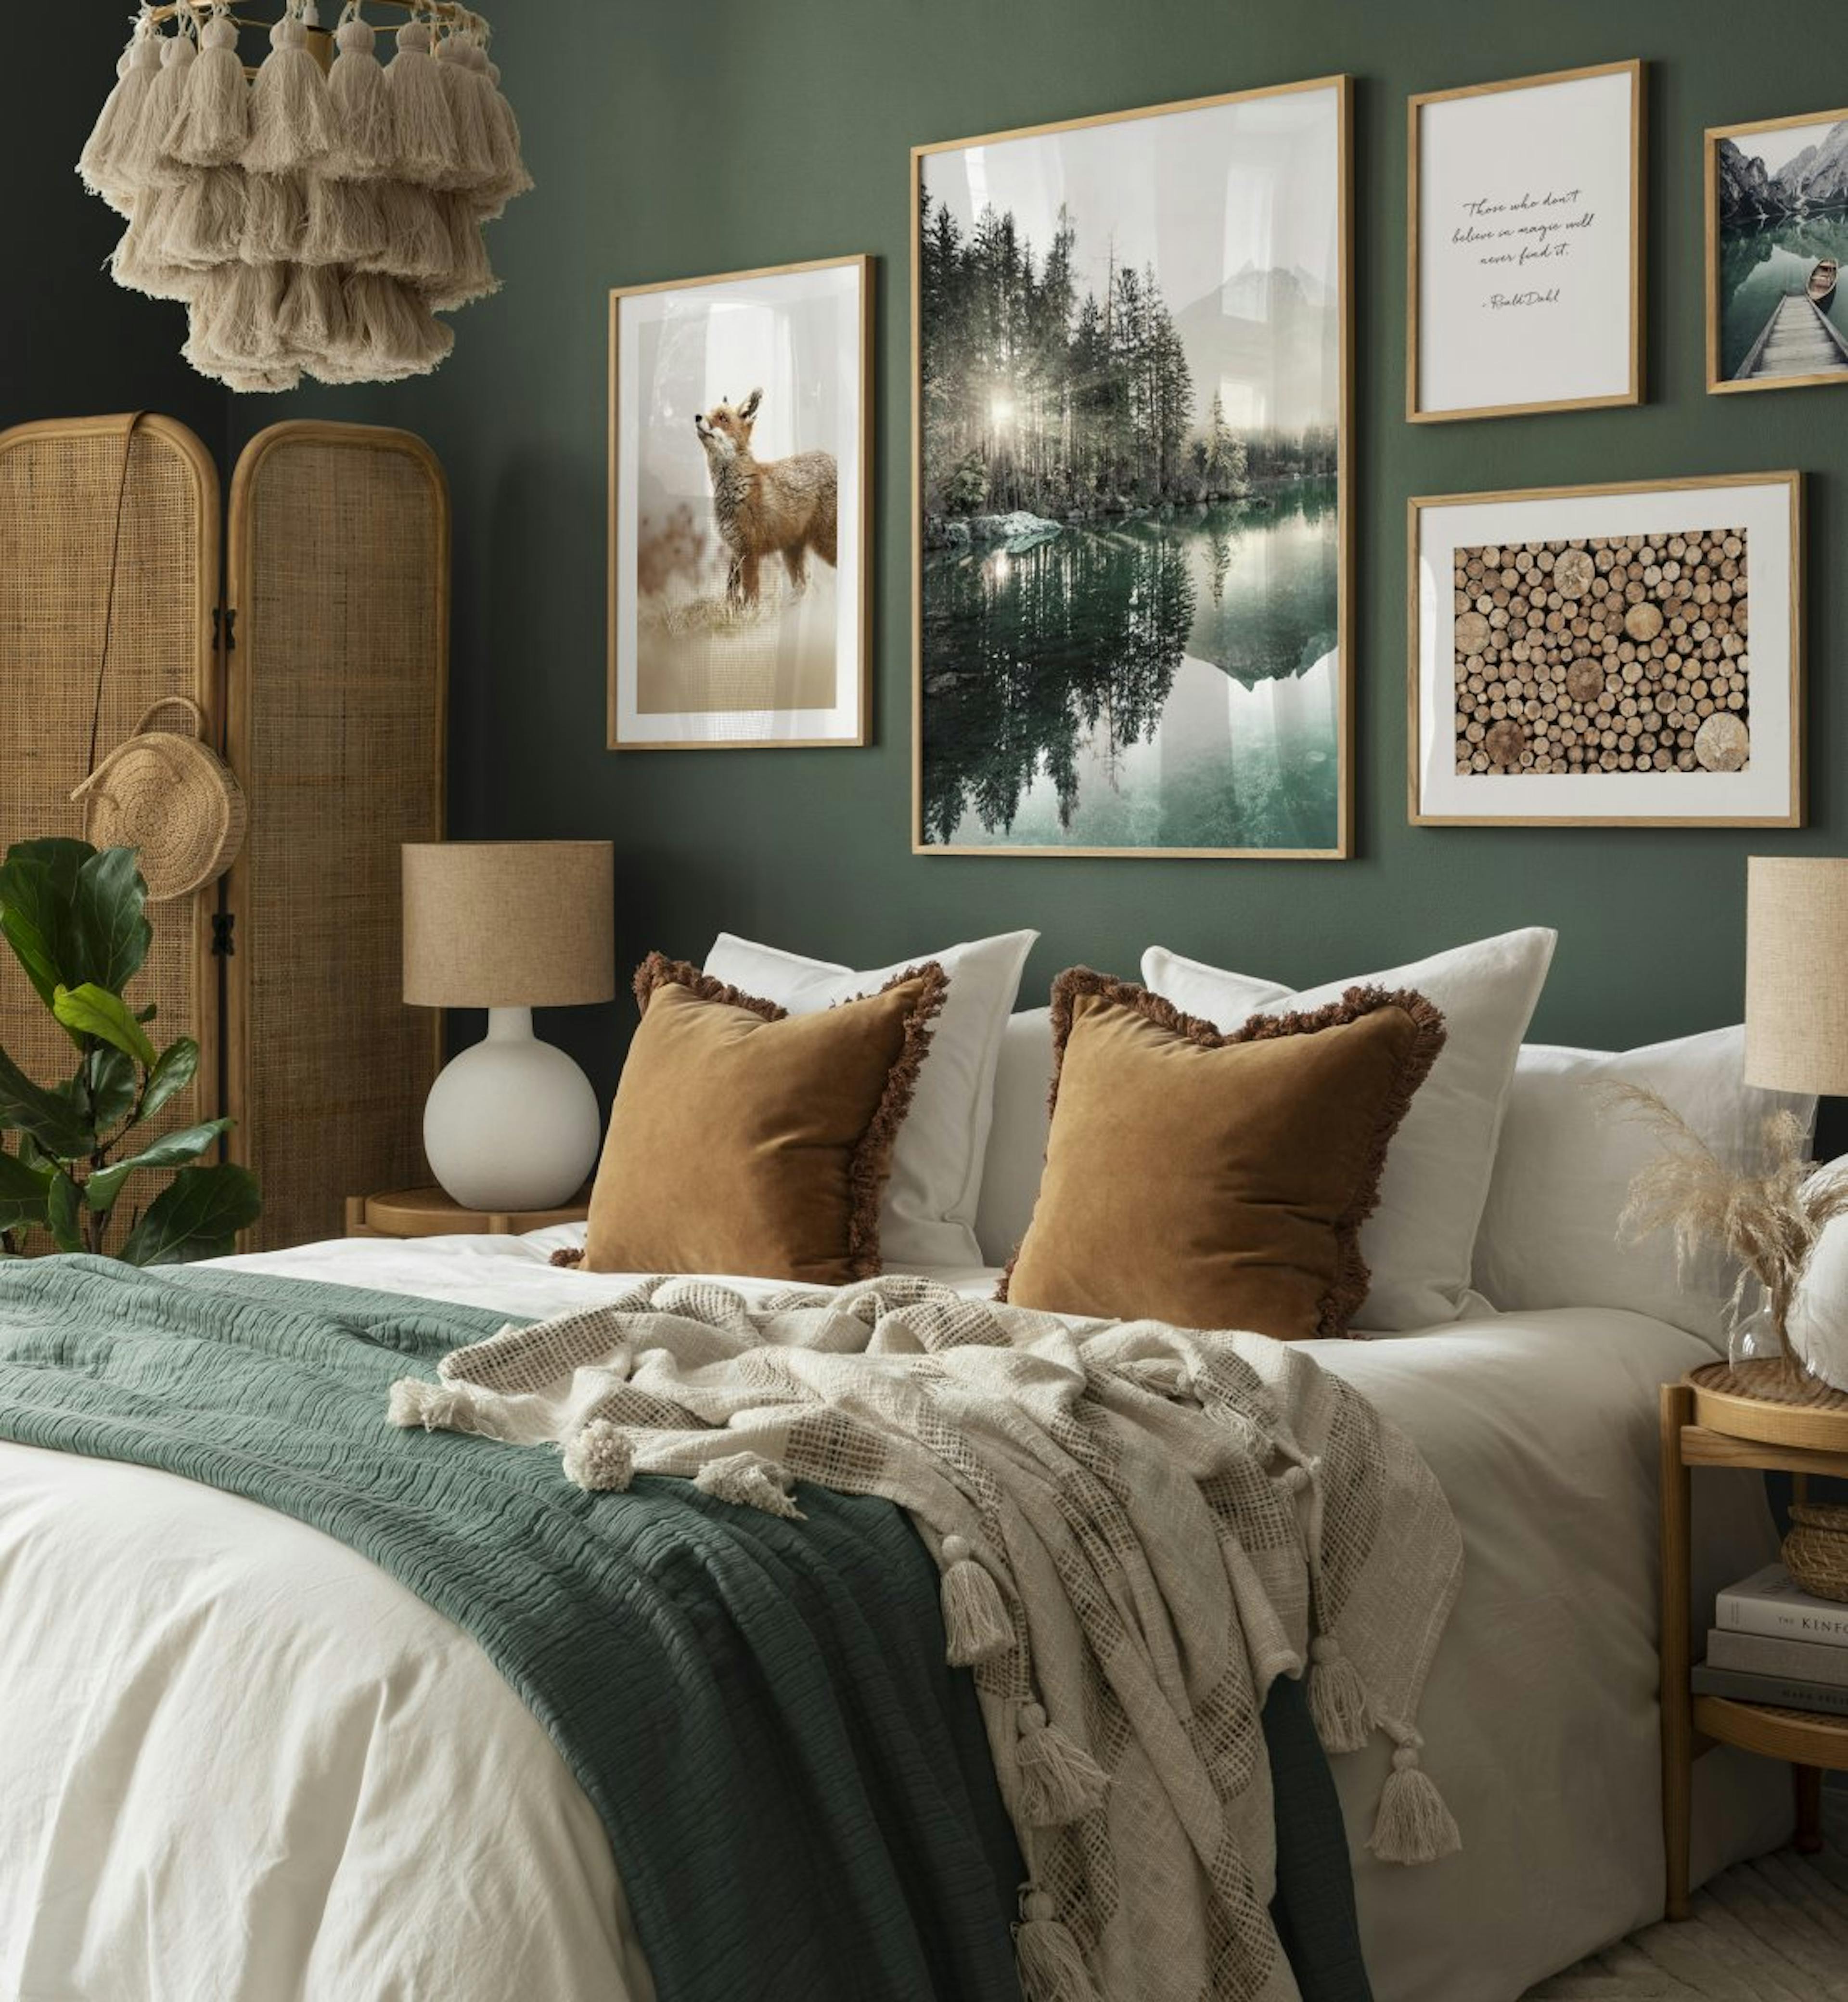 Dark nature posters and animal prints in trendy bohemic bedroom